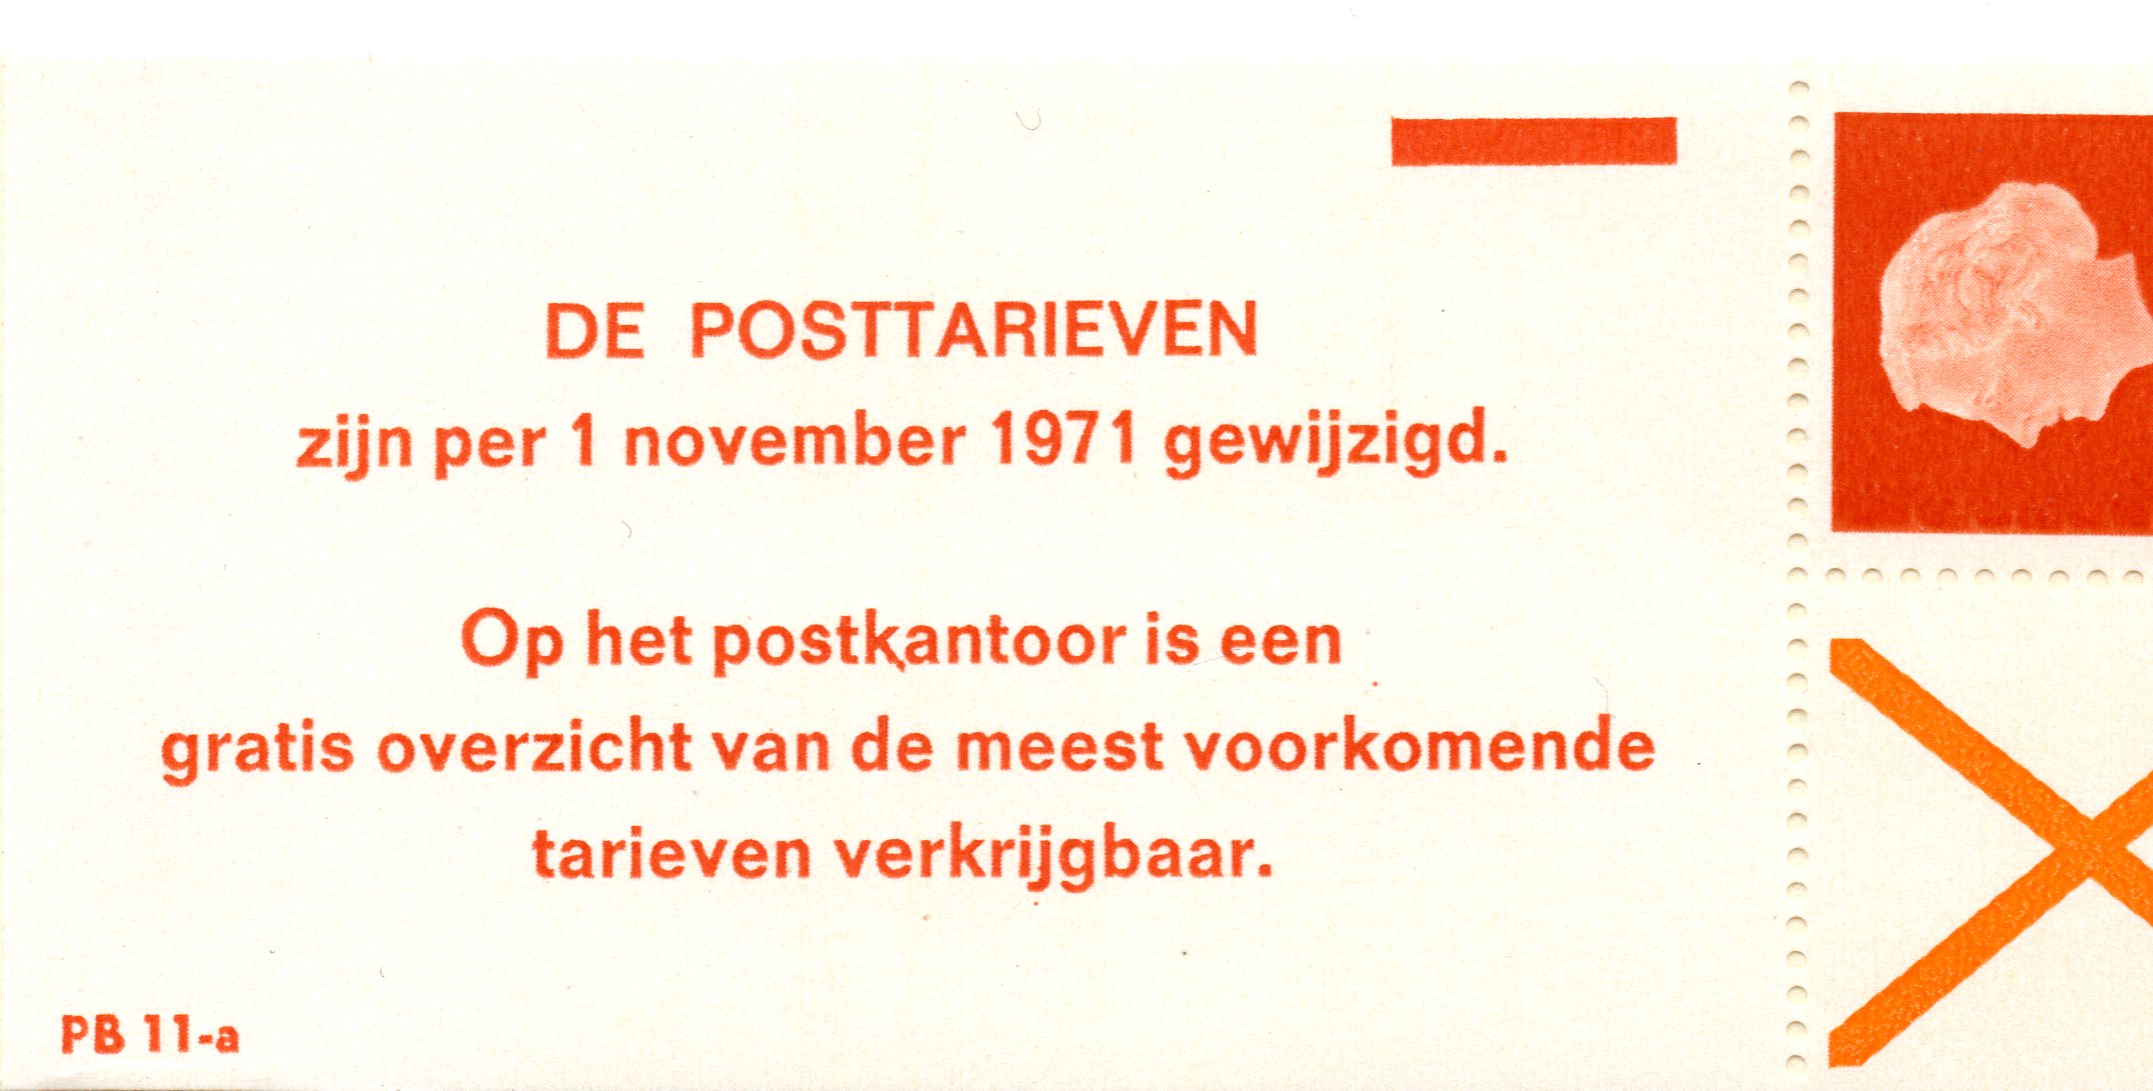 Pb11a met plaatfout in T; verlengde "k" in postkantoor.